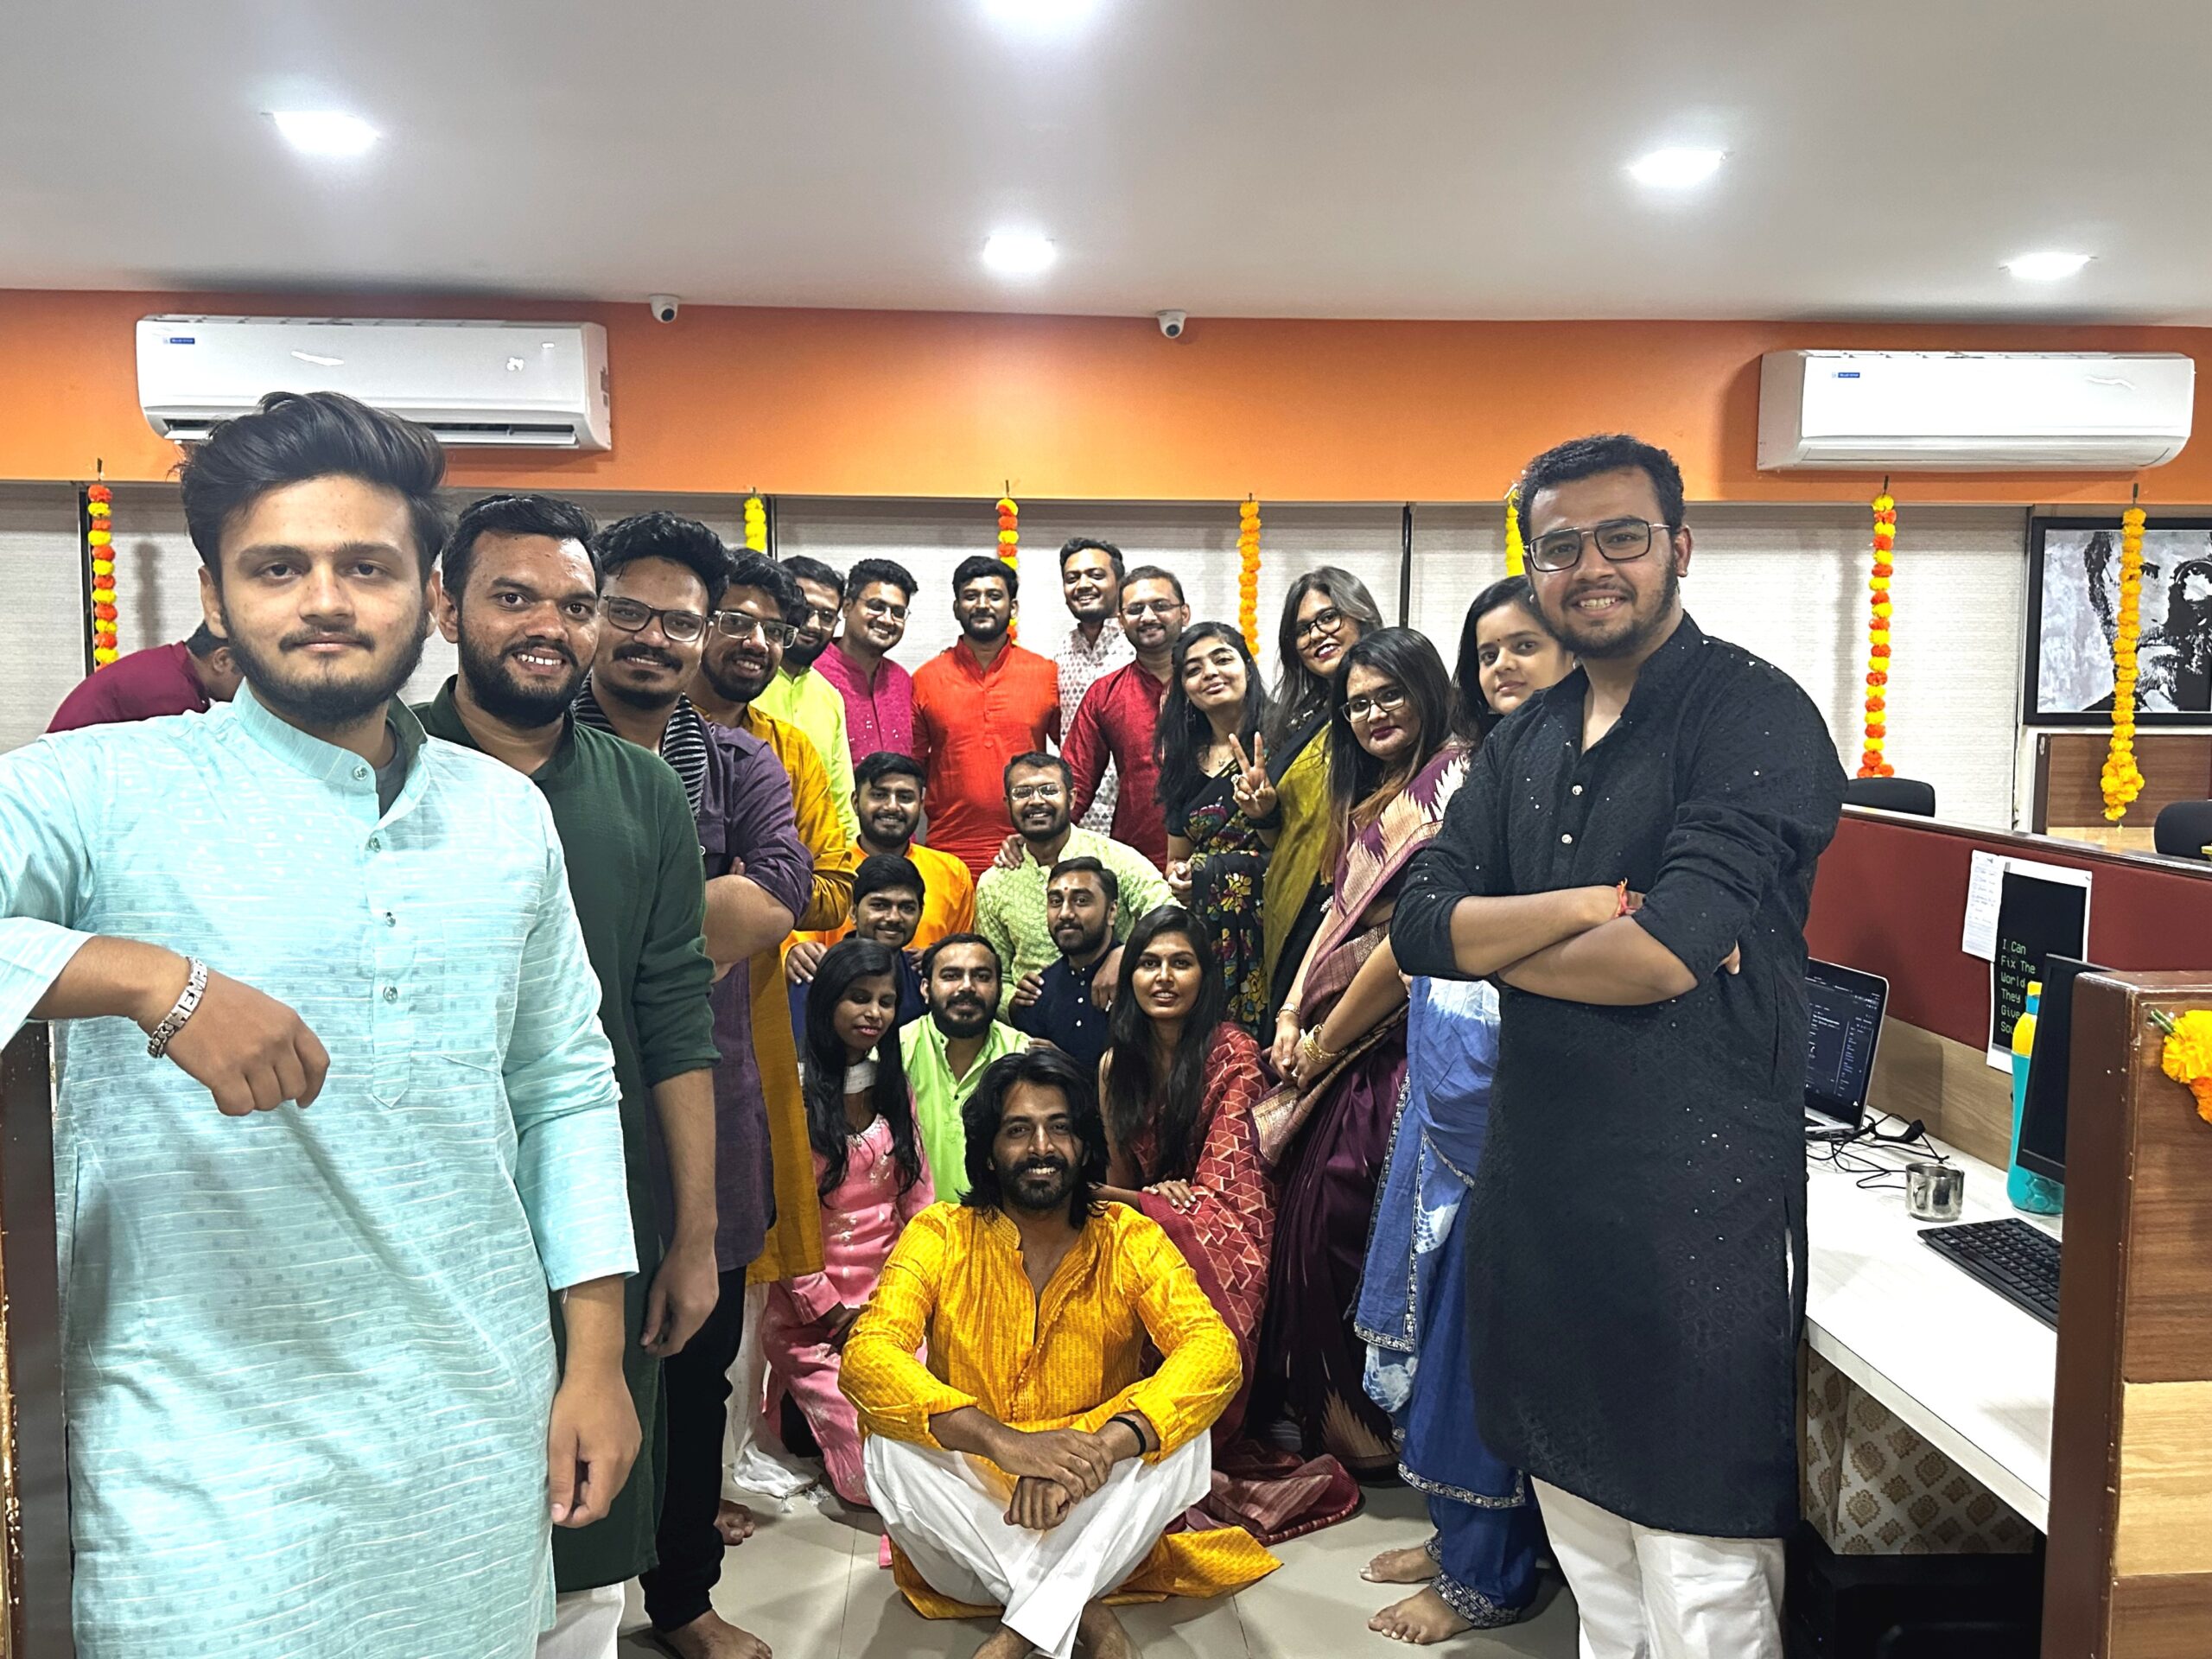 Diwali Celebration at Office